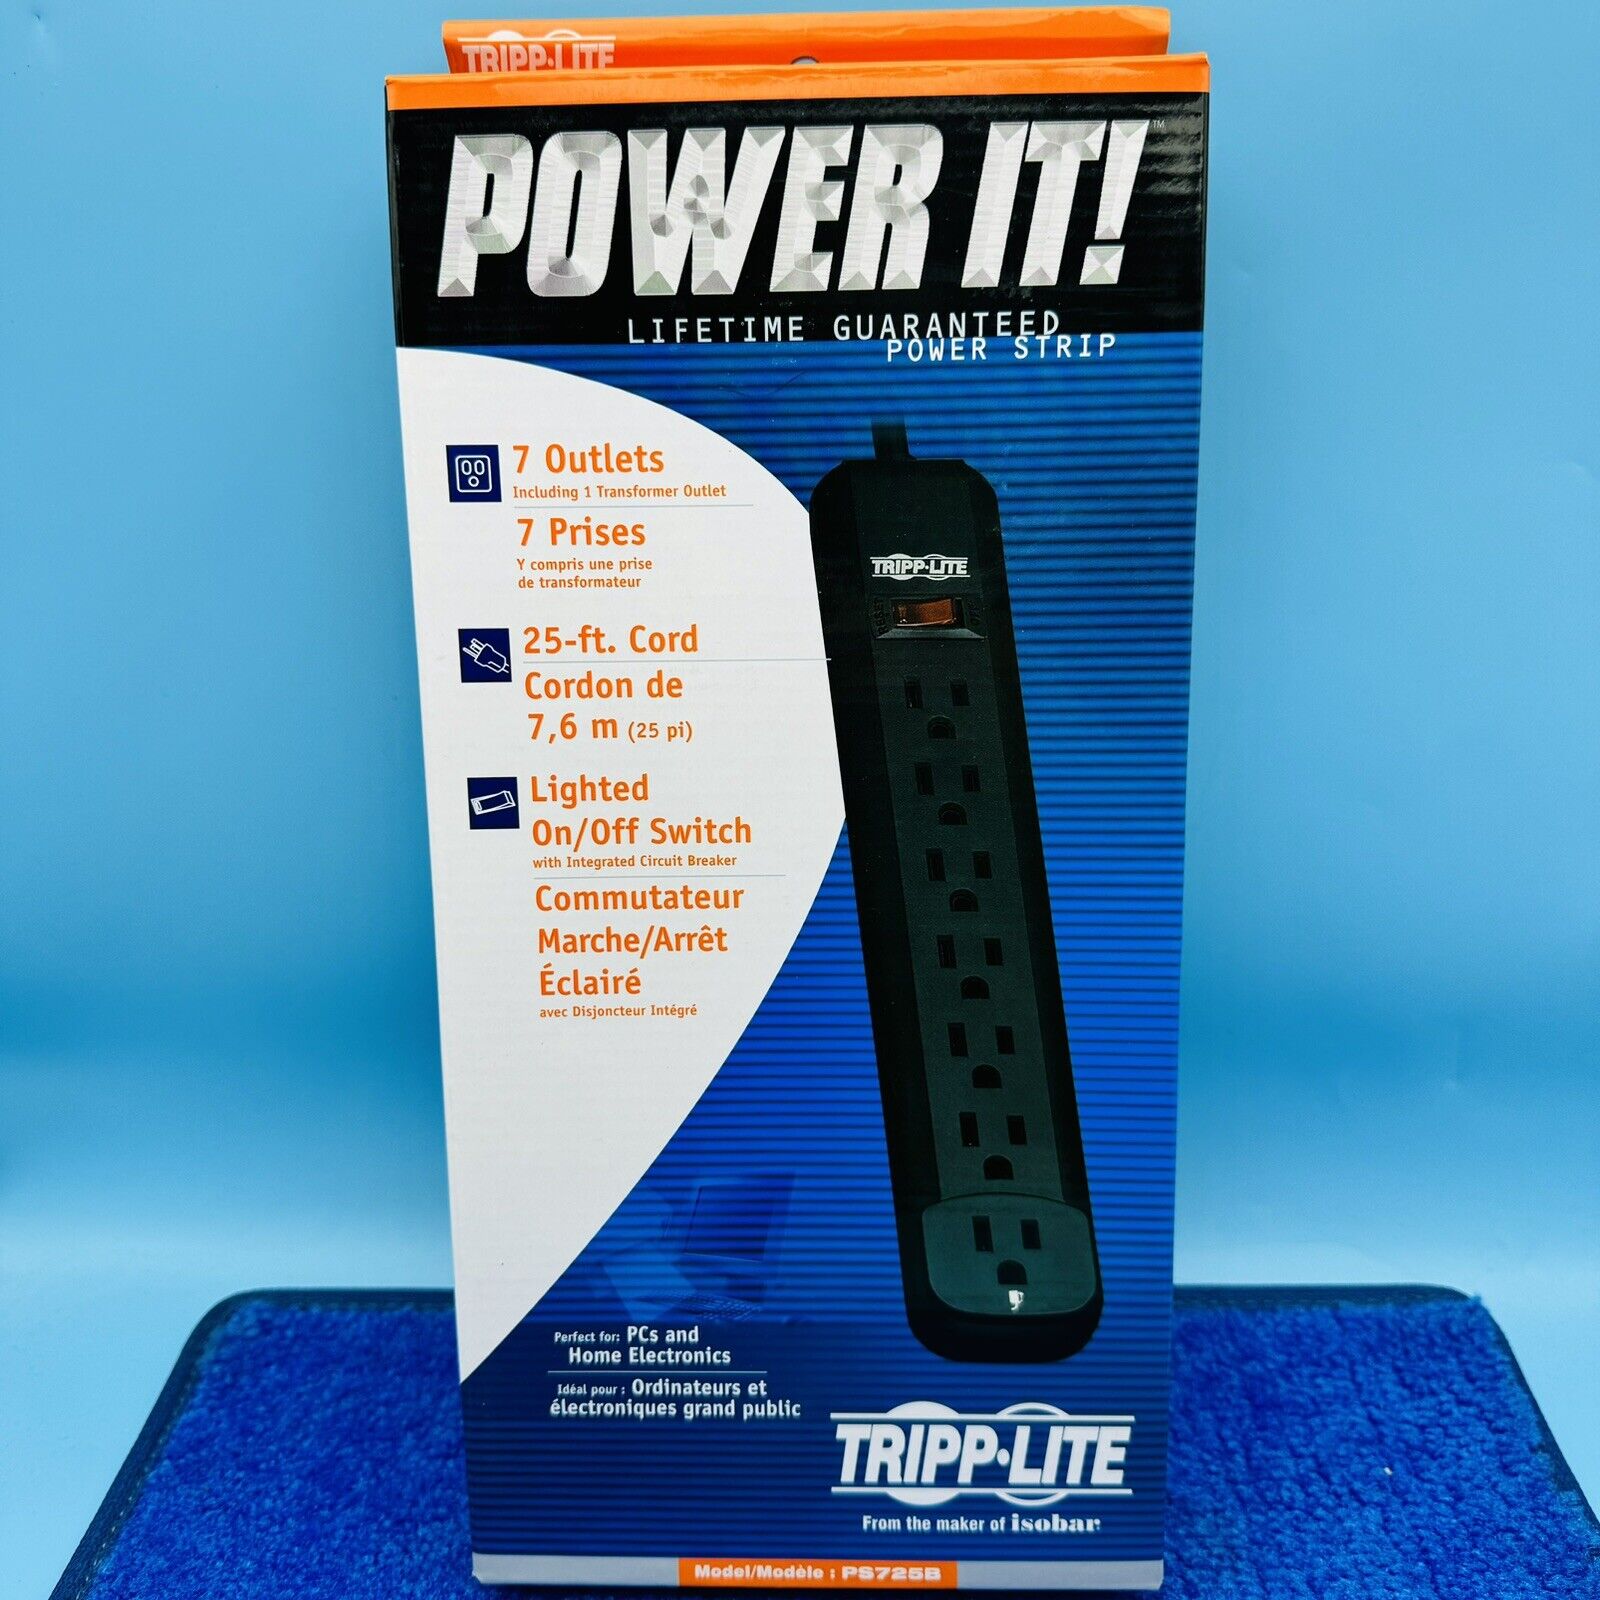 Tripp-Lite 25FT Surge Protector (PS725B) 7 Outlets Power Strip, Black